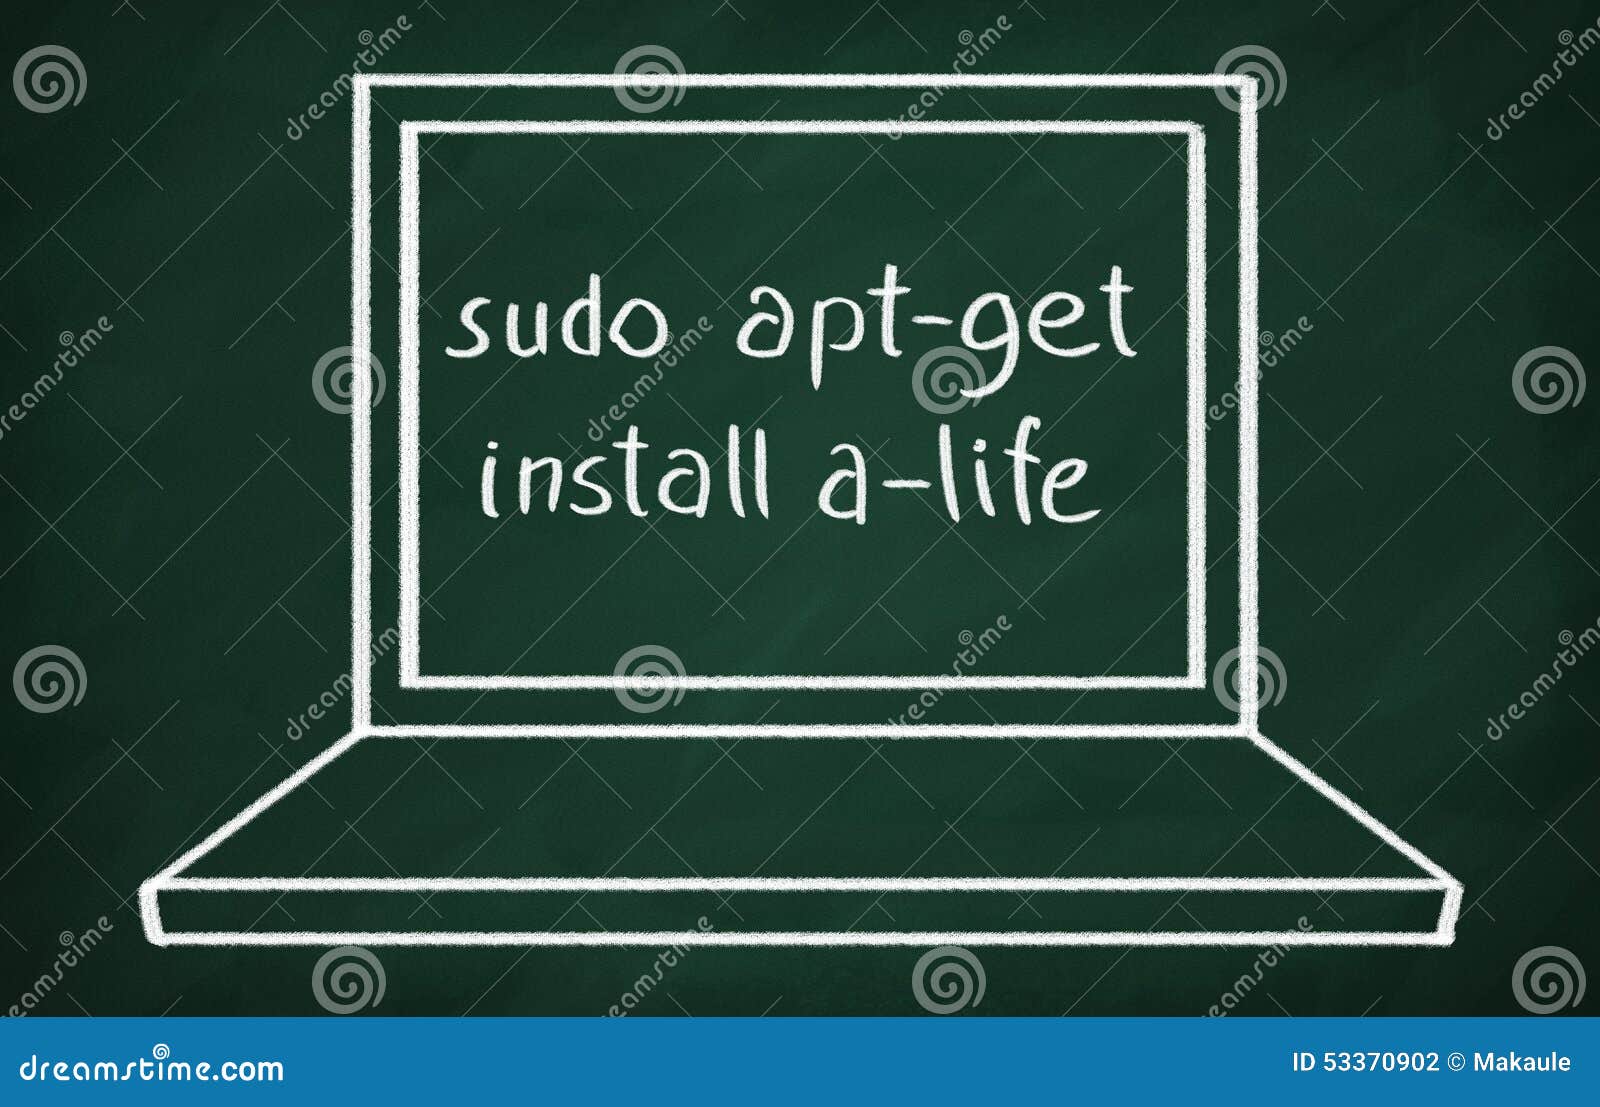 Sudo Aptget Install Alife Stock Photo  Image of concept, work 53370902